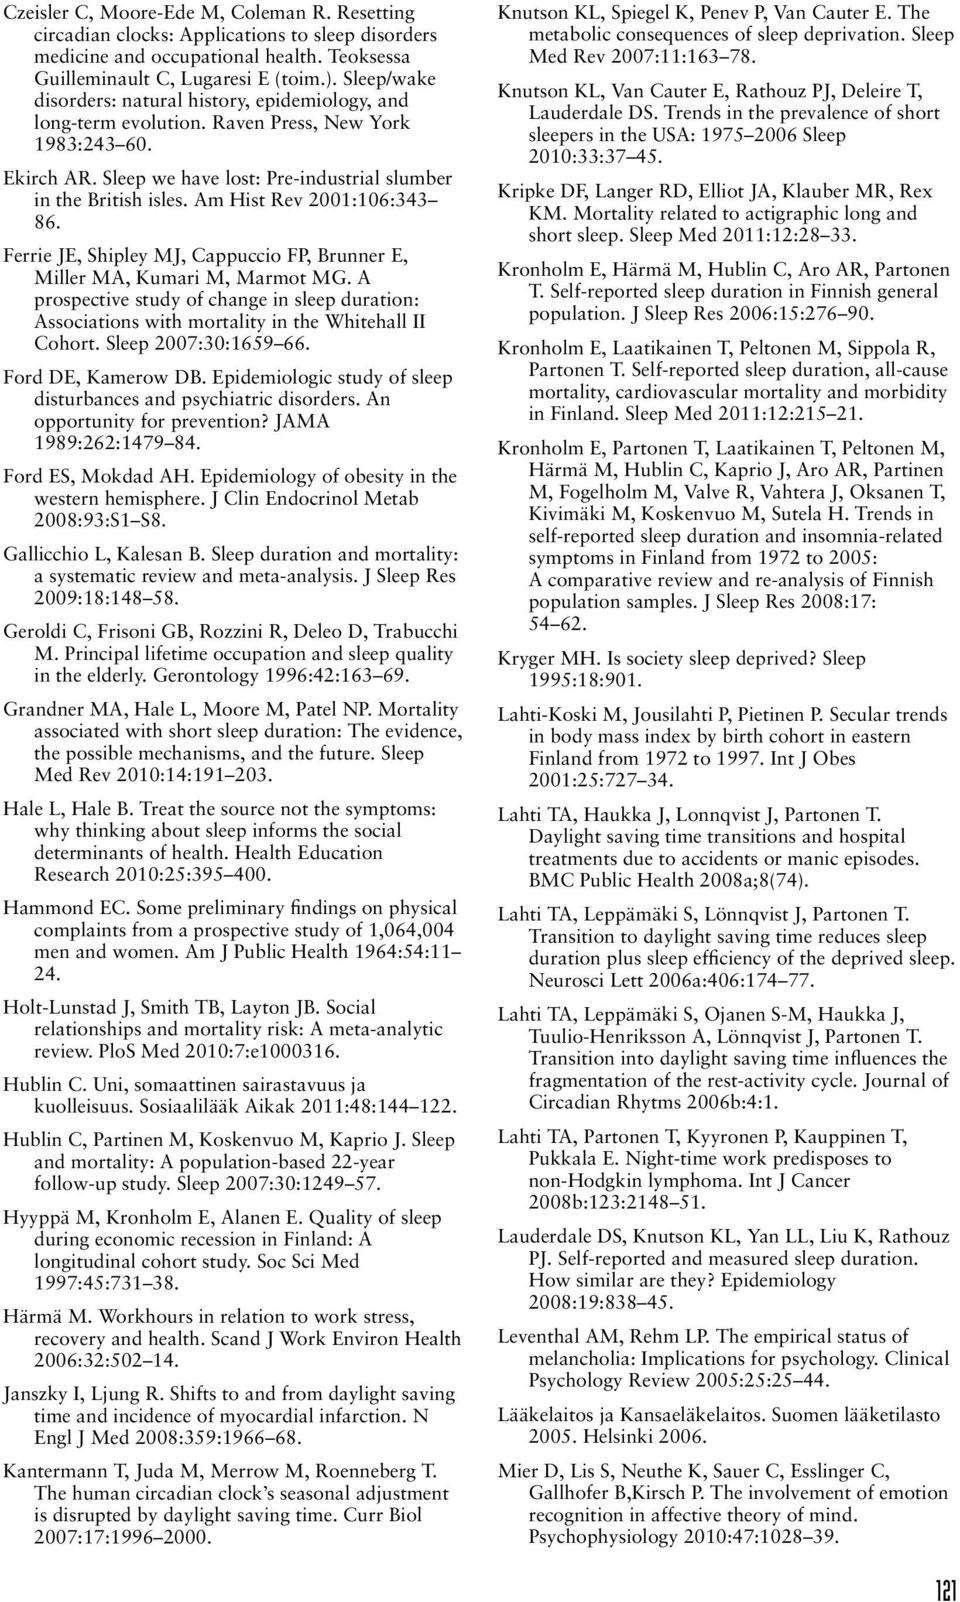 Am Hist Rev 2001:106:343 86. Ferrie JE, Shipley MJ, Cappuccio FP, Brunner E, Miller MA, Kumari M, Marmot MG.